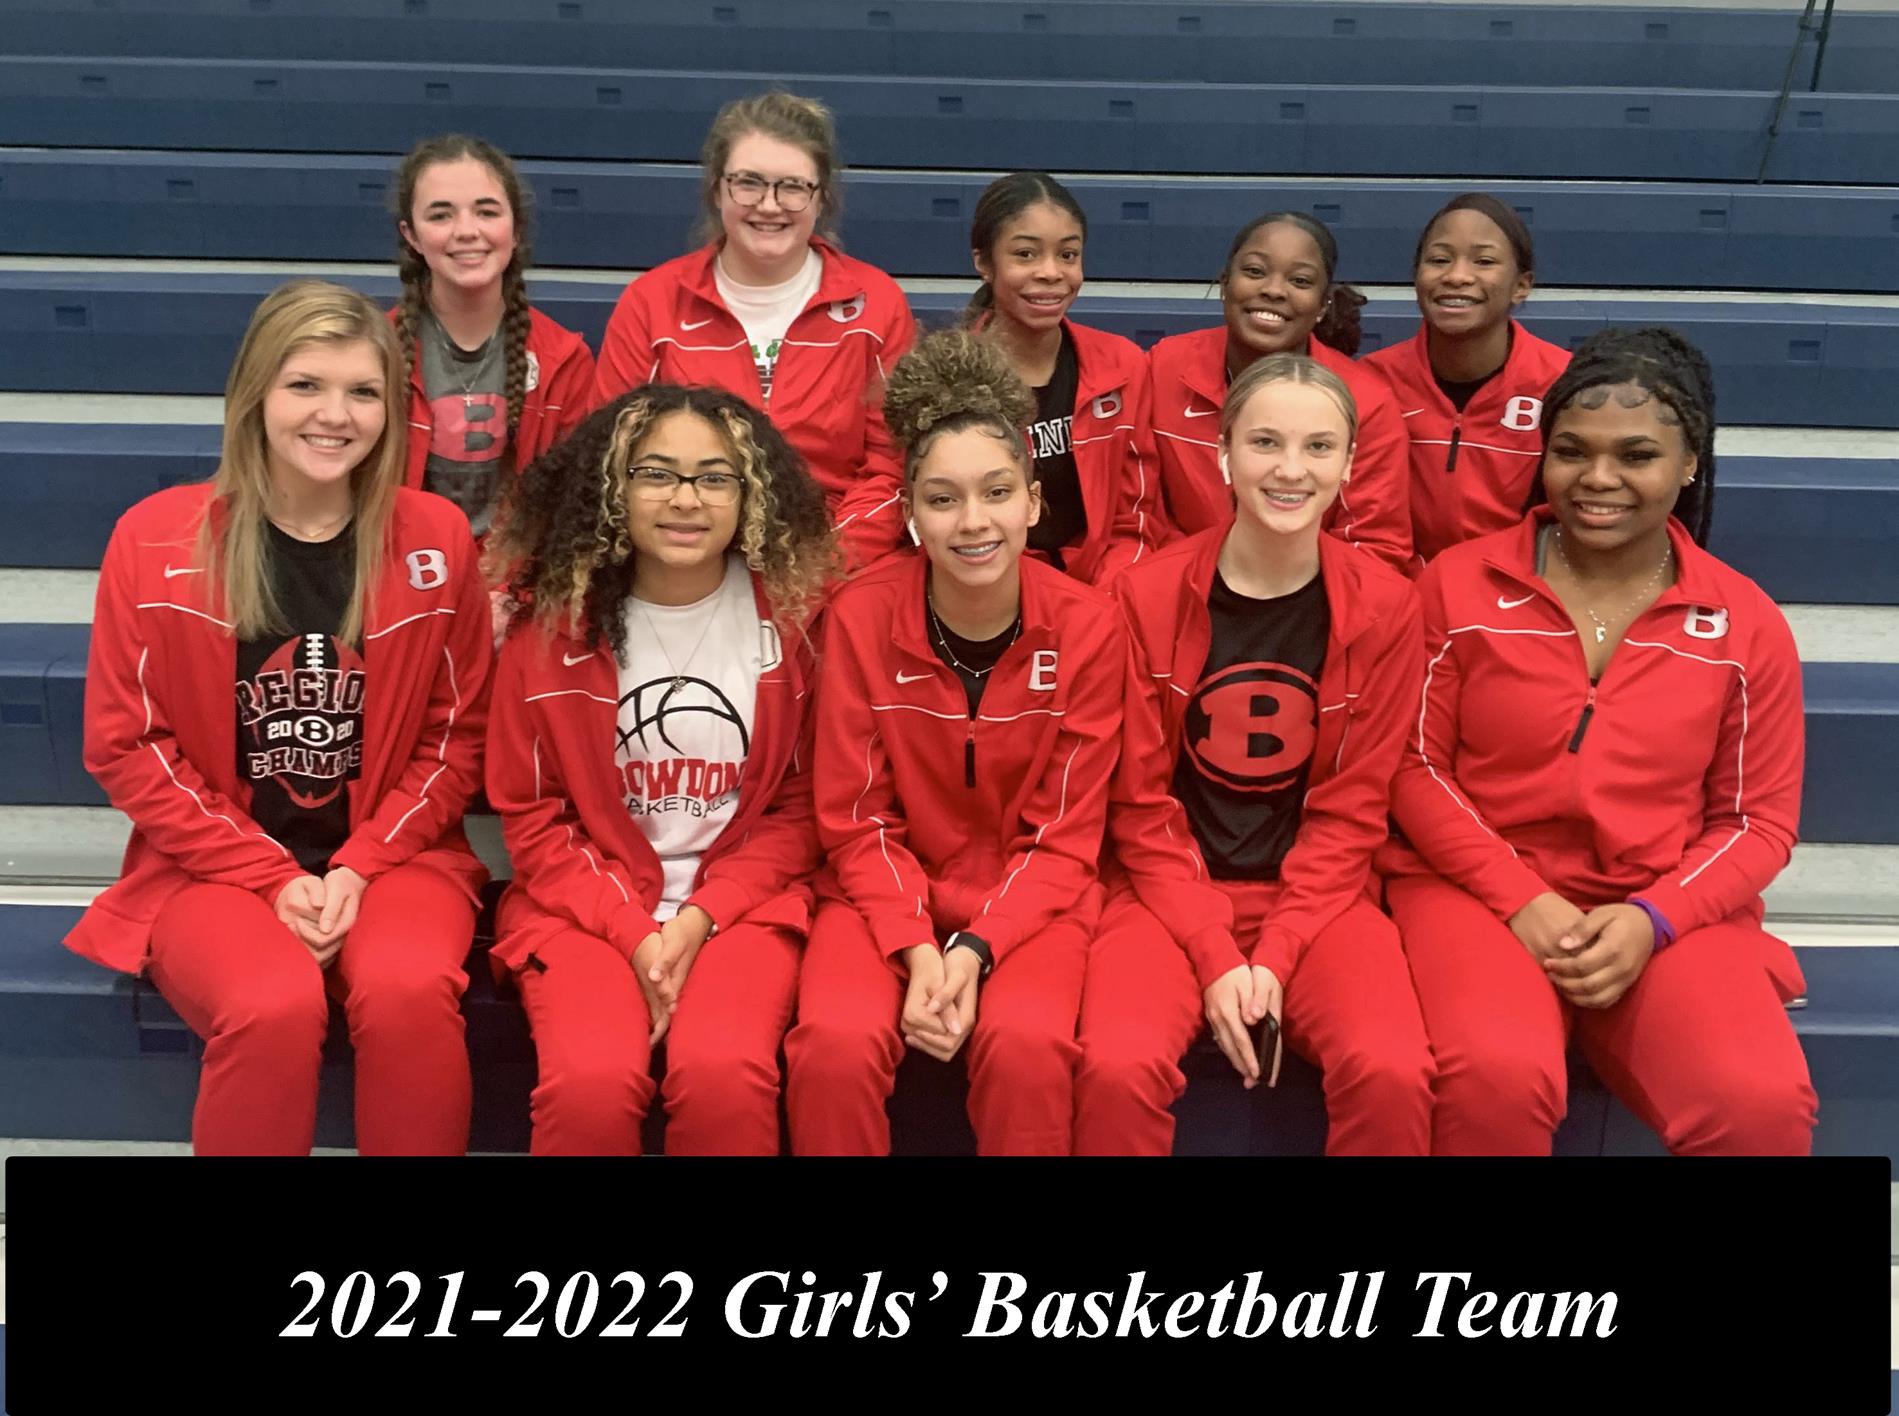 Girls basketball team 2021/2022